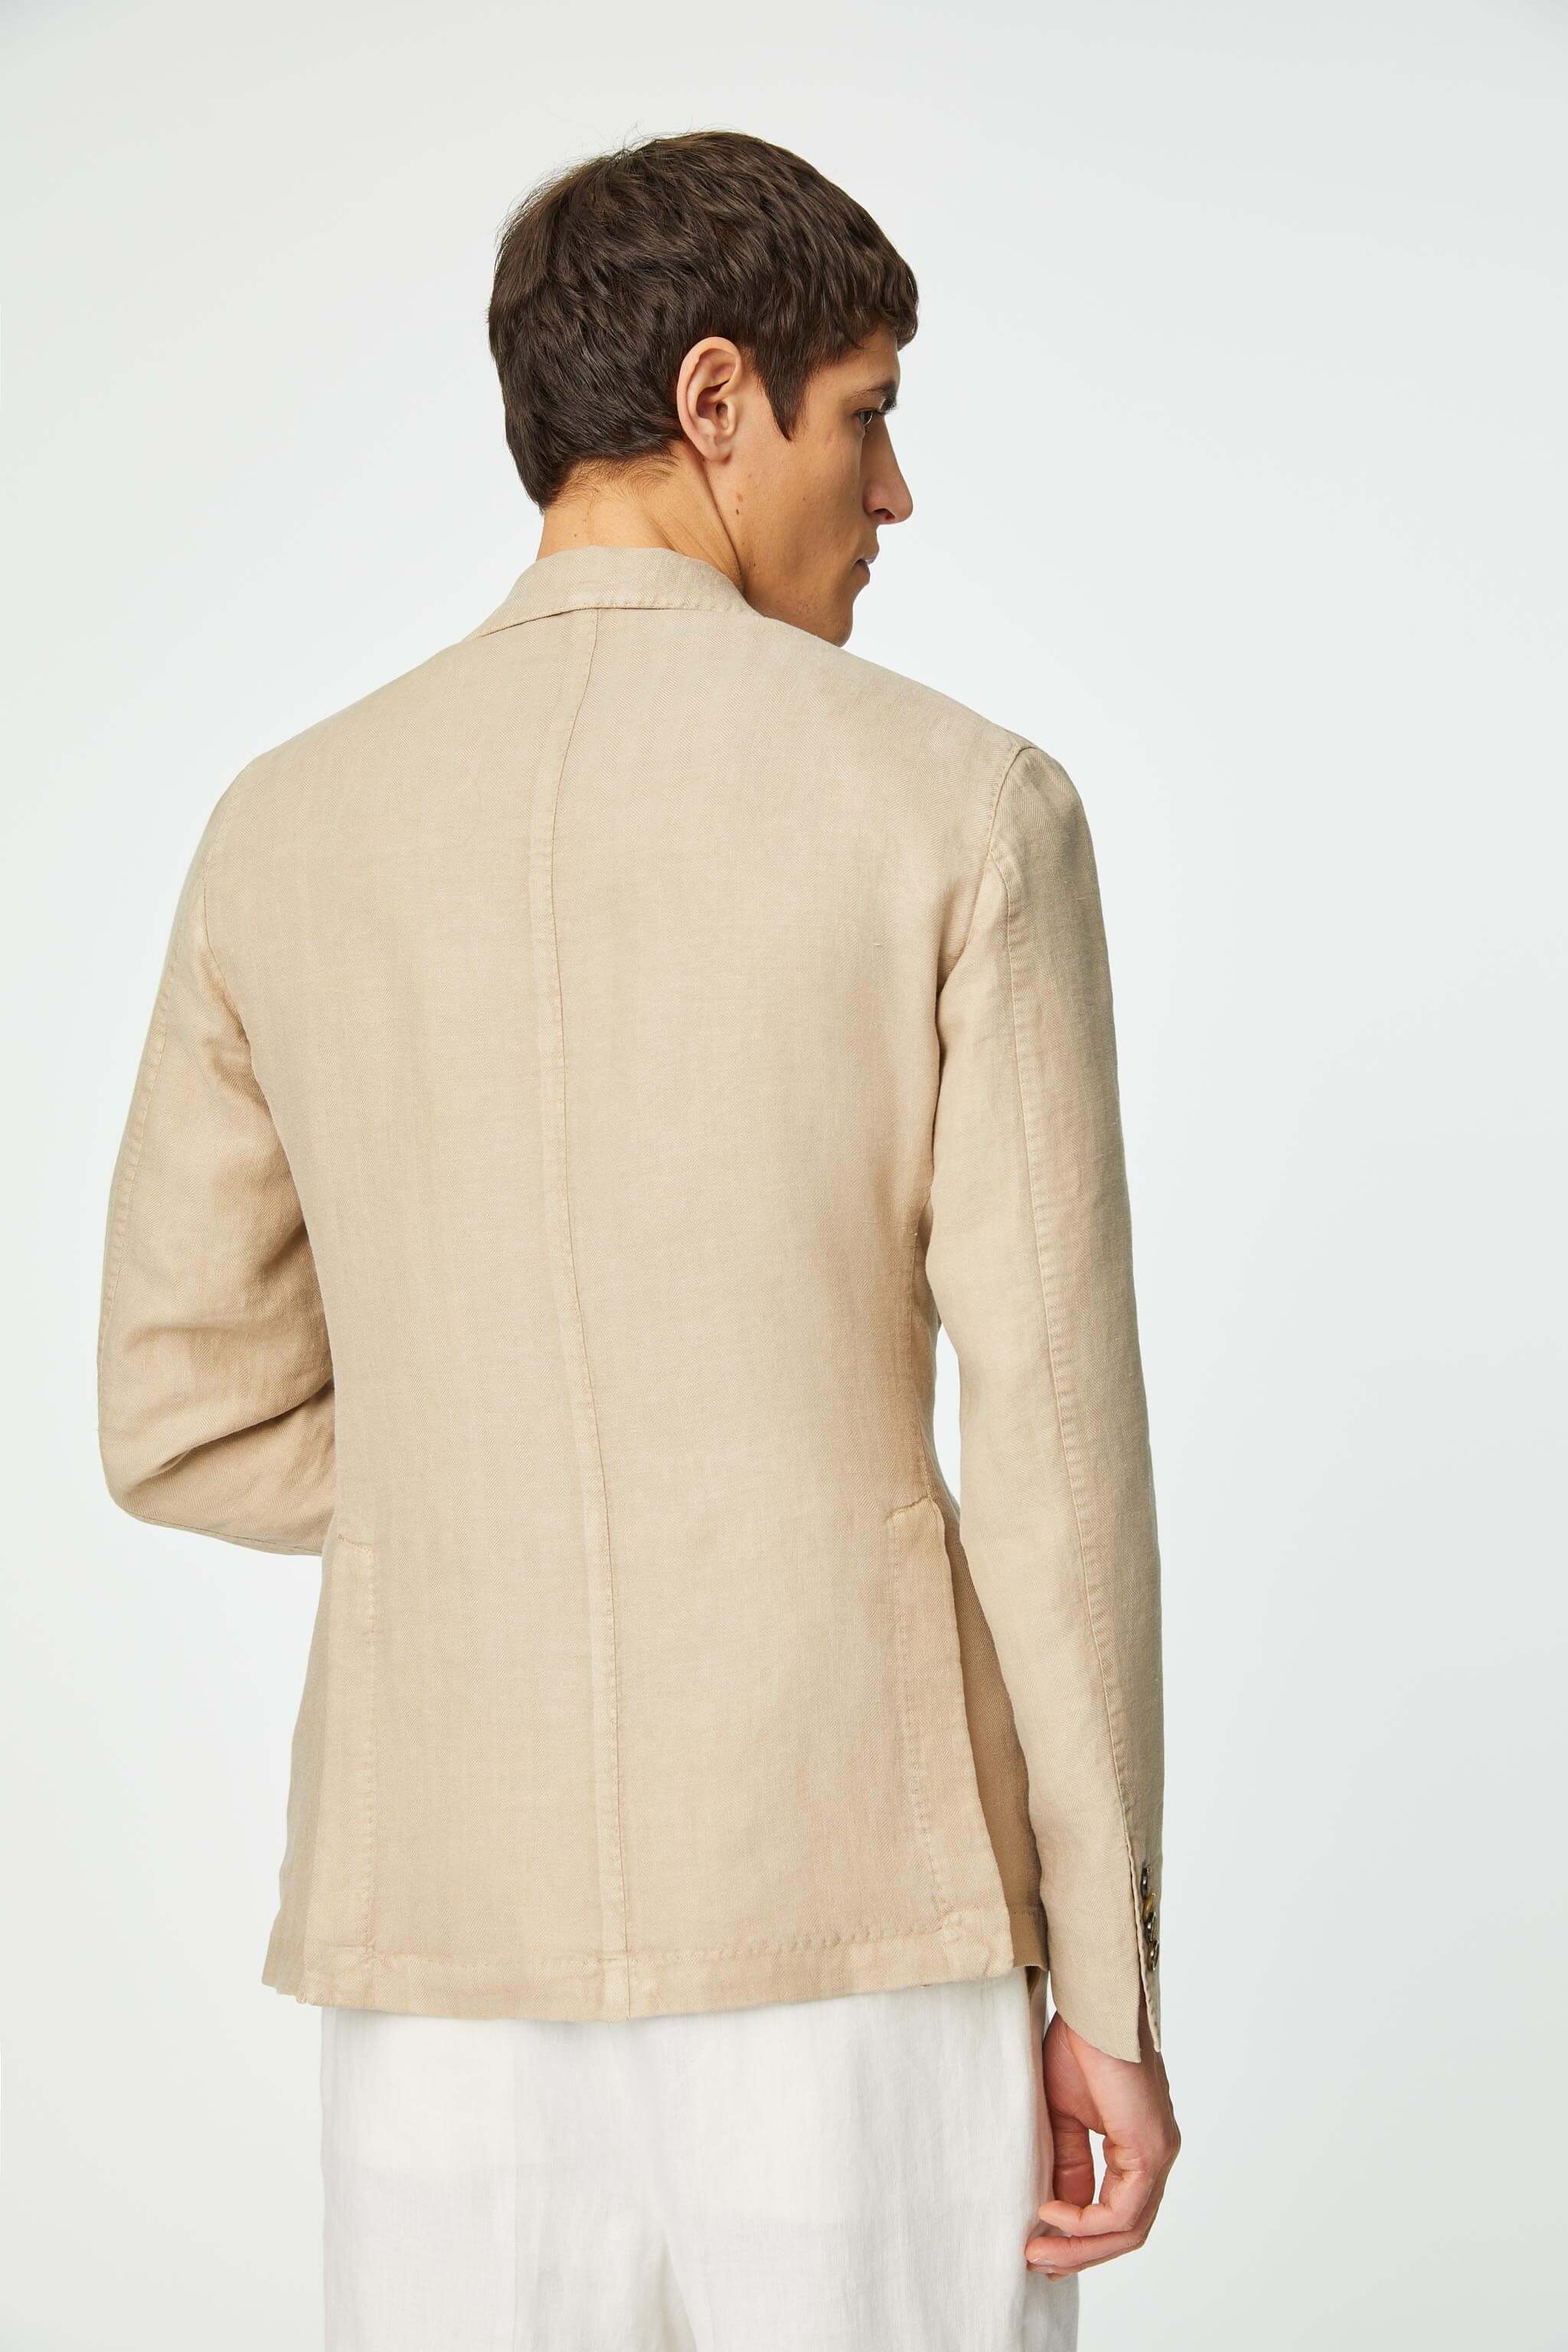 Garment-dyed TOM jacket in soft beige